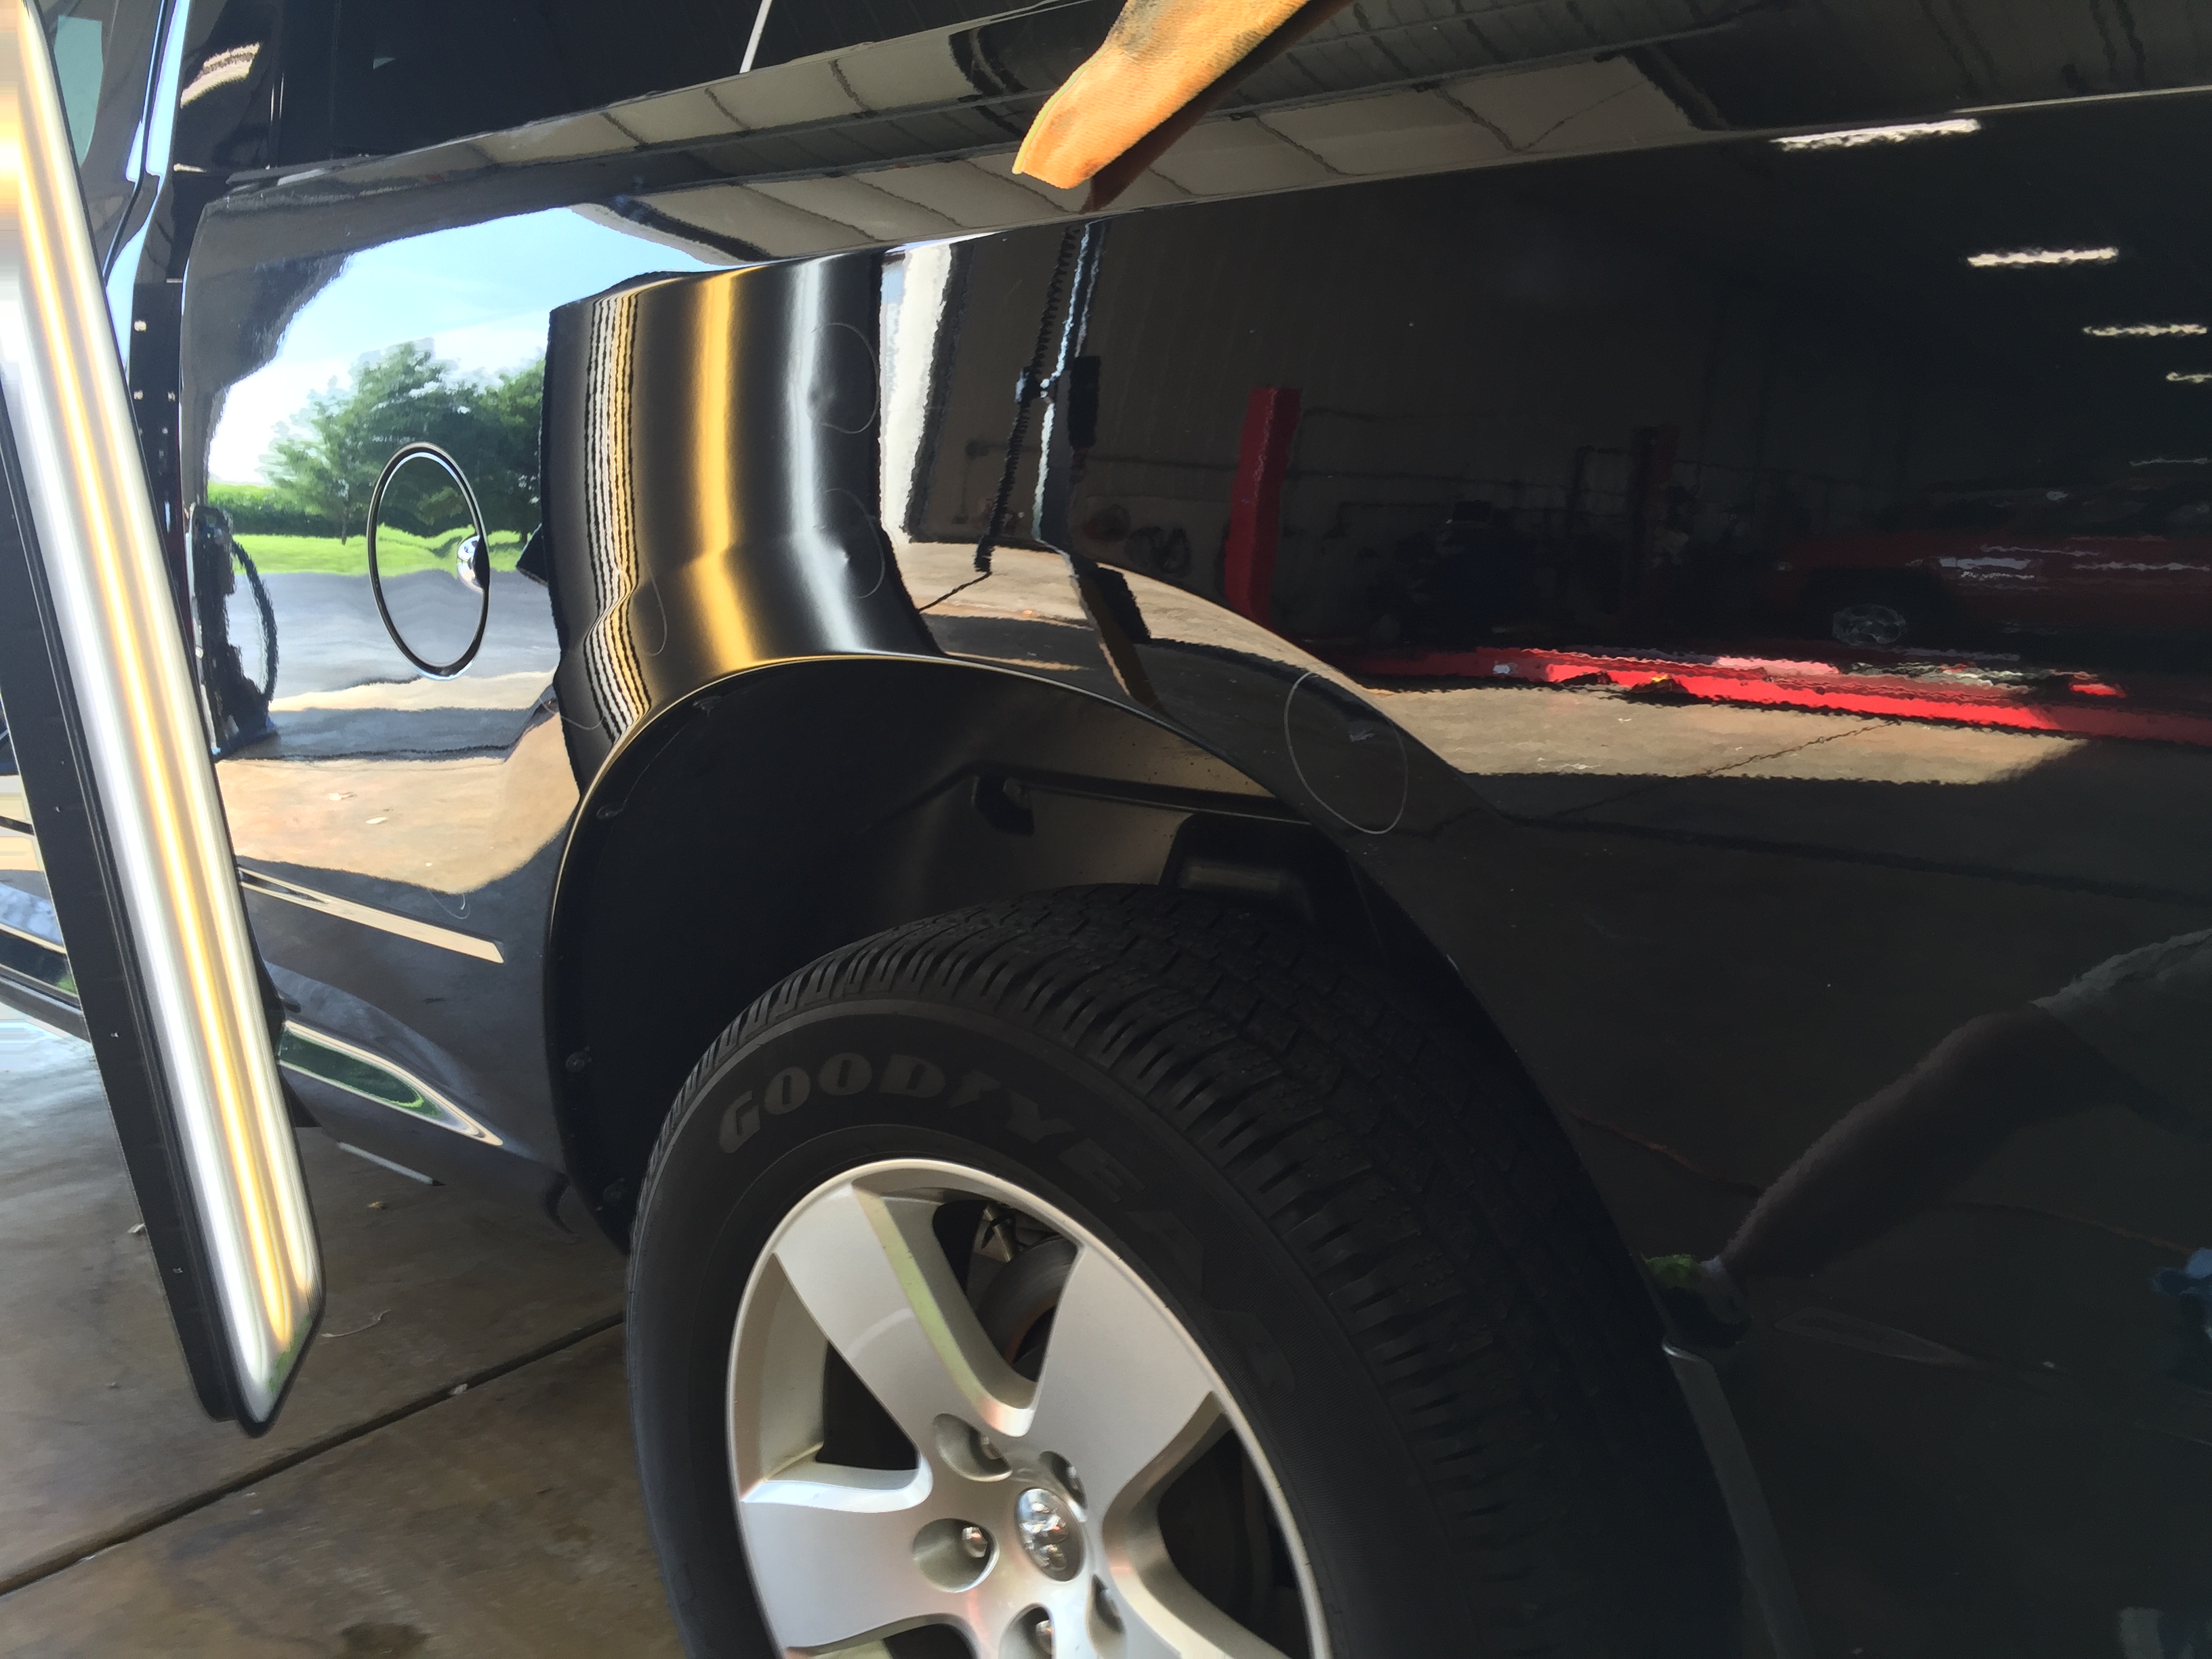 2012 Dodge Ram Bedside Damage, Paintless Dent Repair, Springfield, IL. http://217dent.com